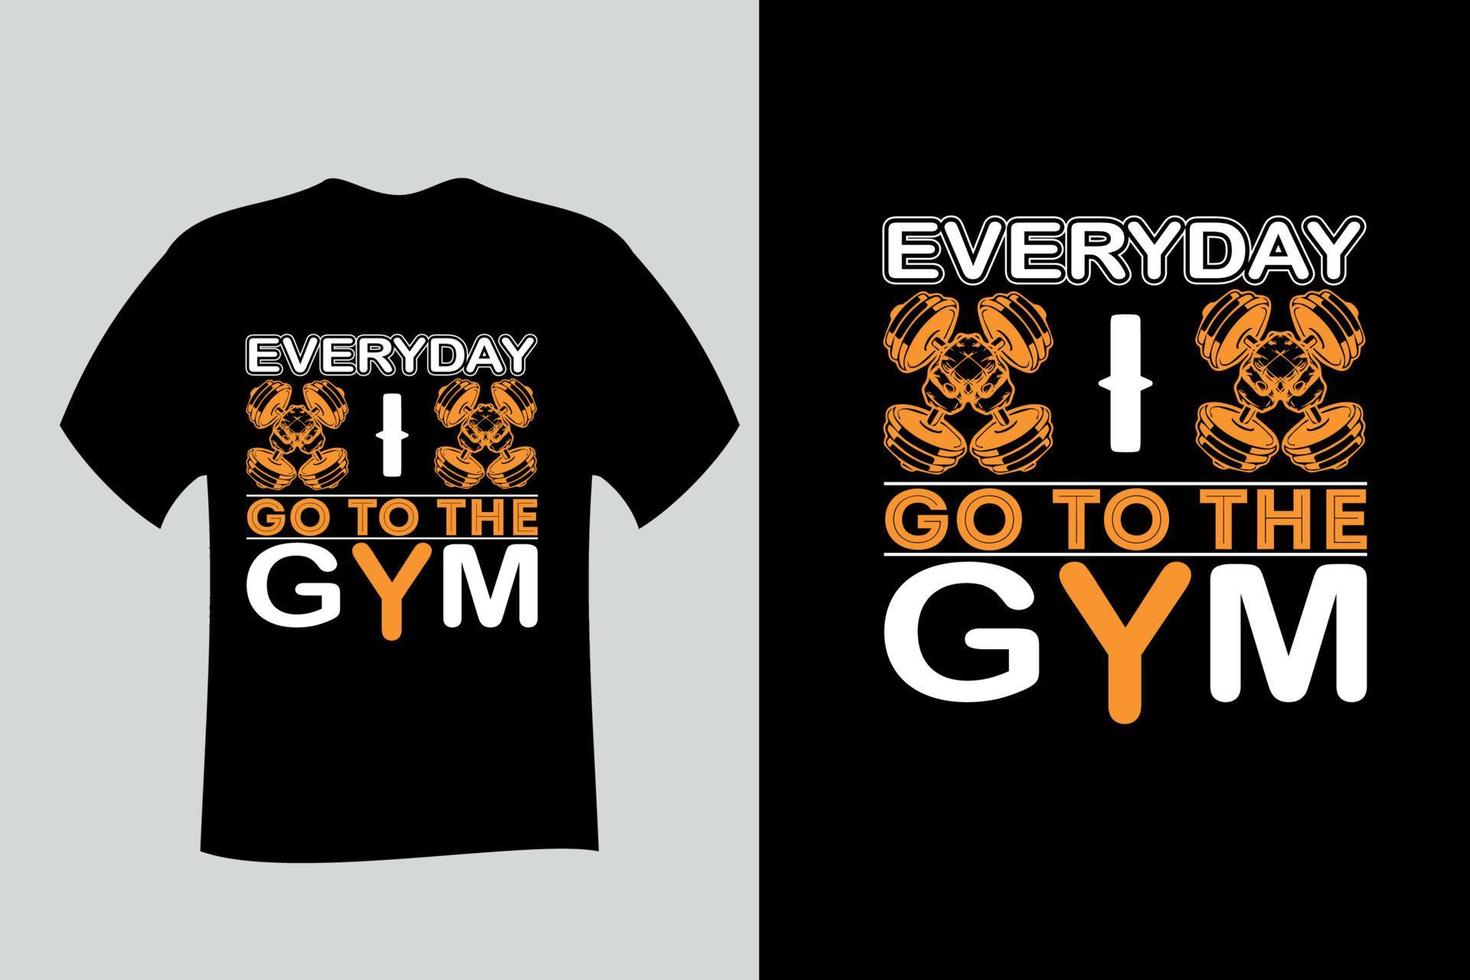 Gym Fitness T Shirt Design vector